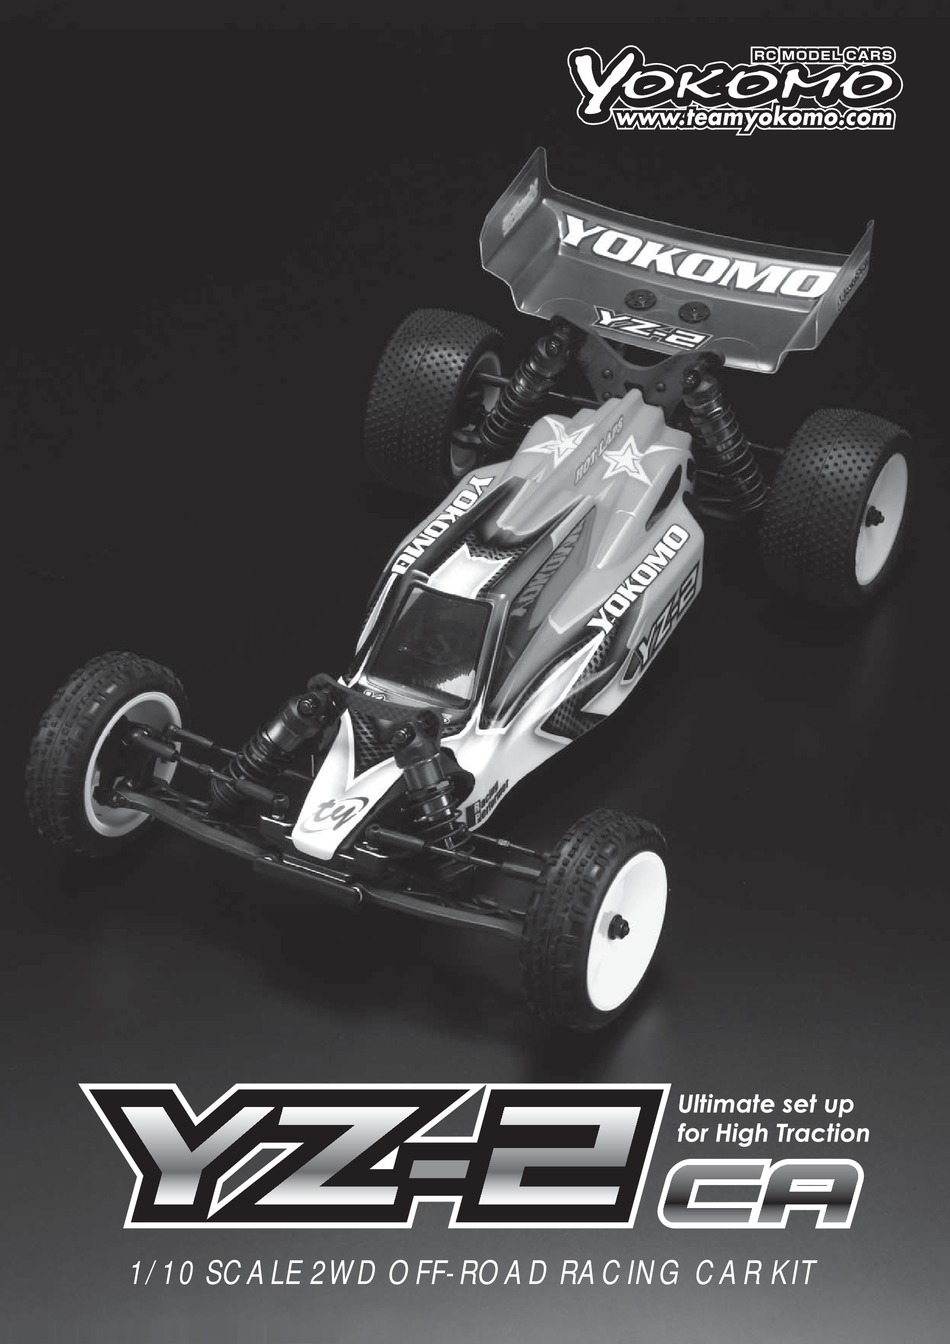 Yokomo Yz 2 Ca Manual Pdf Download Manualslib